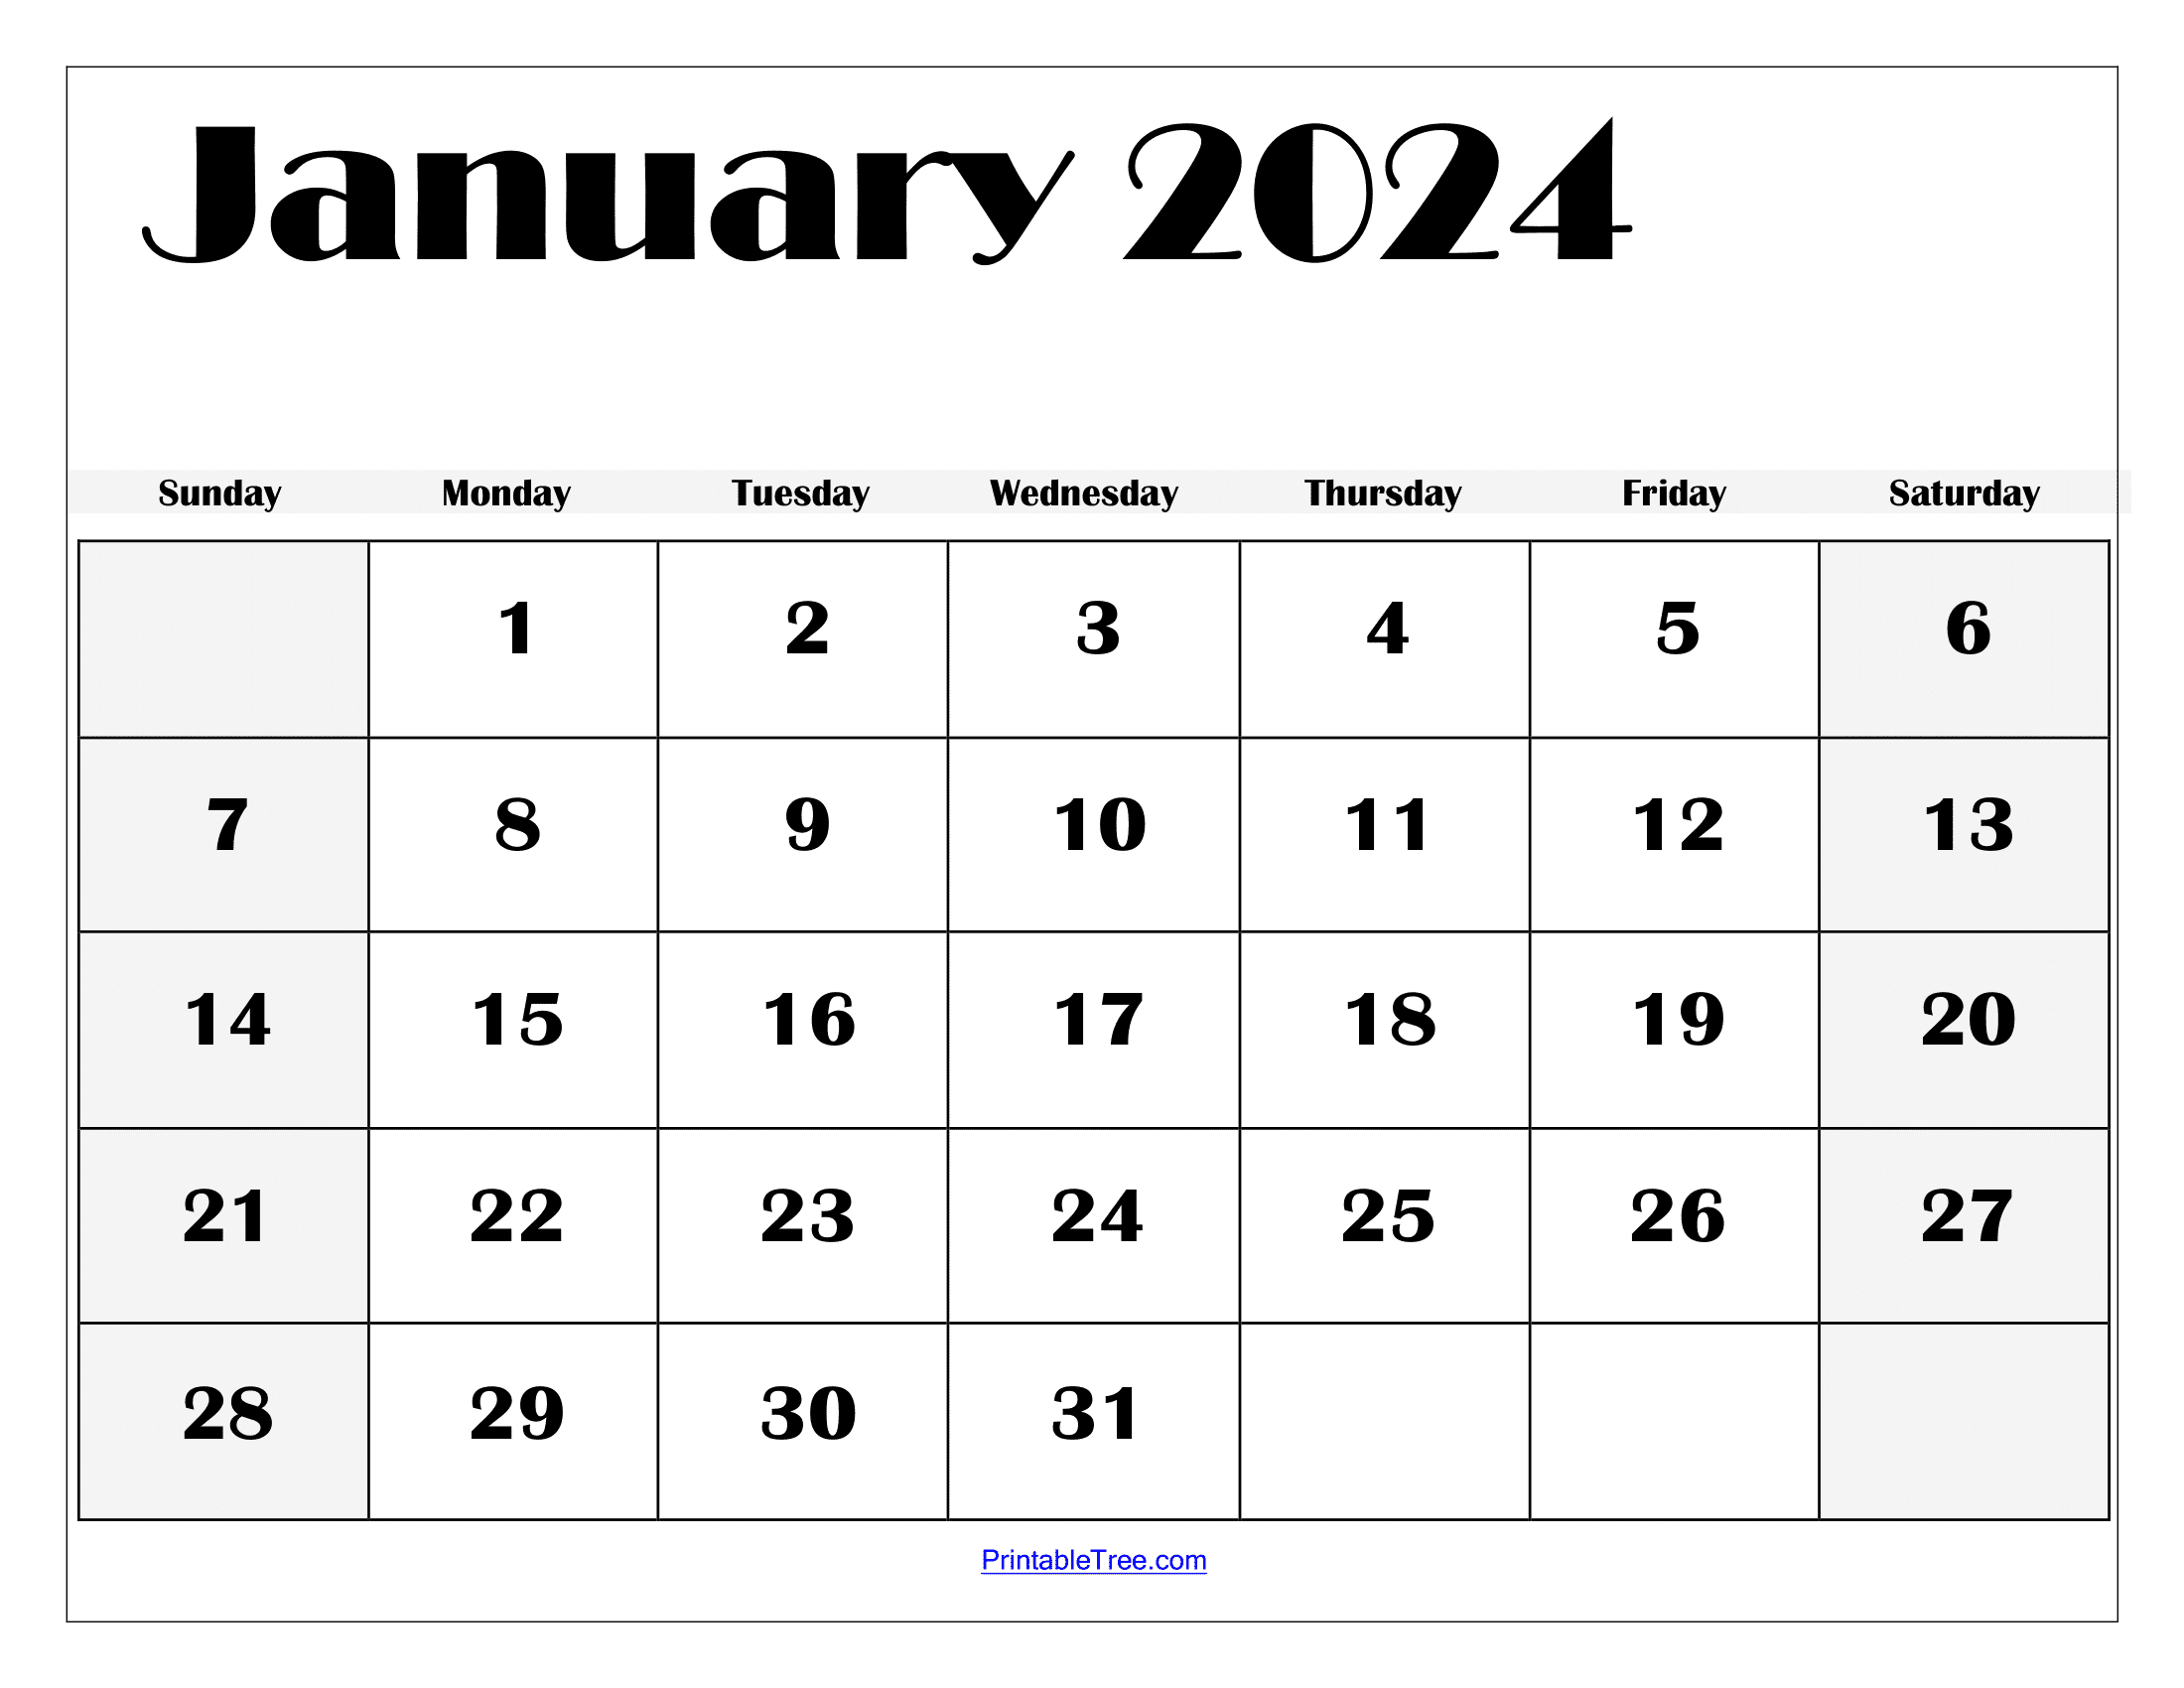 January 2024 Calendar Printable Pdf Template With Holidays | Free Printable Calendar January 2024 Pdf